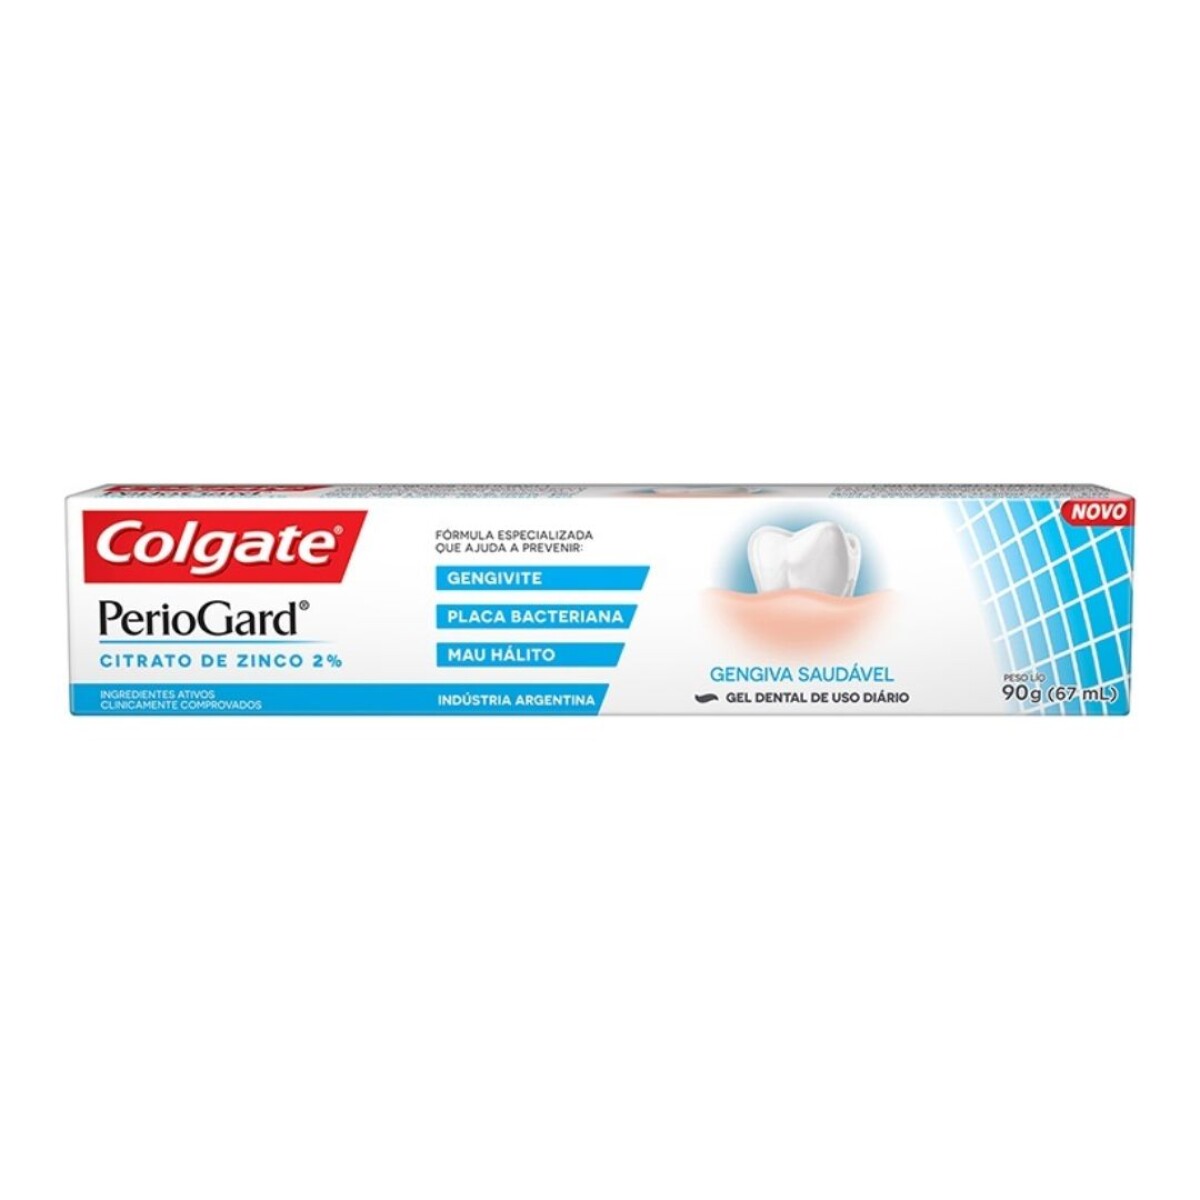 Colgate PerioGard - Crema Dental 90g 